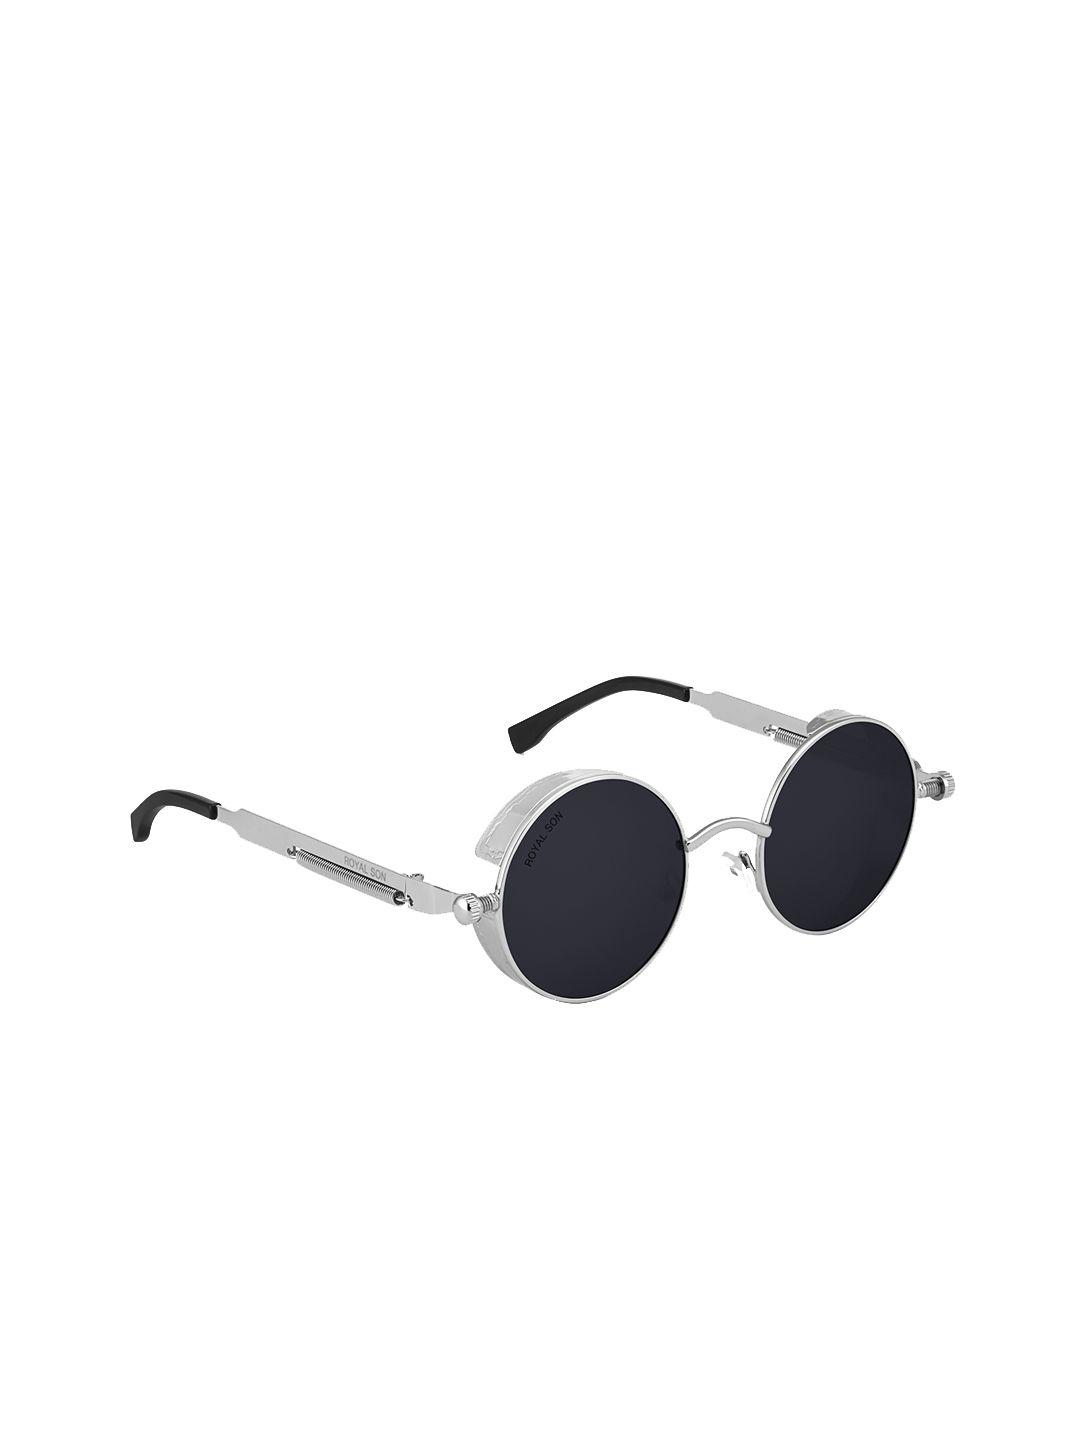 royal-son-unisex-round-polarised-&-uv-protected-sunglasses-chi0084-c1